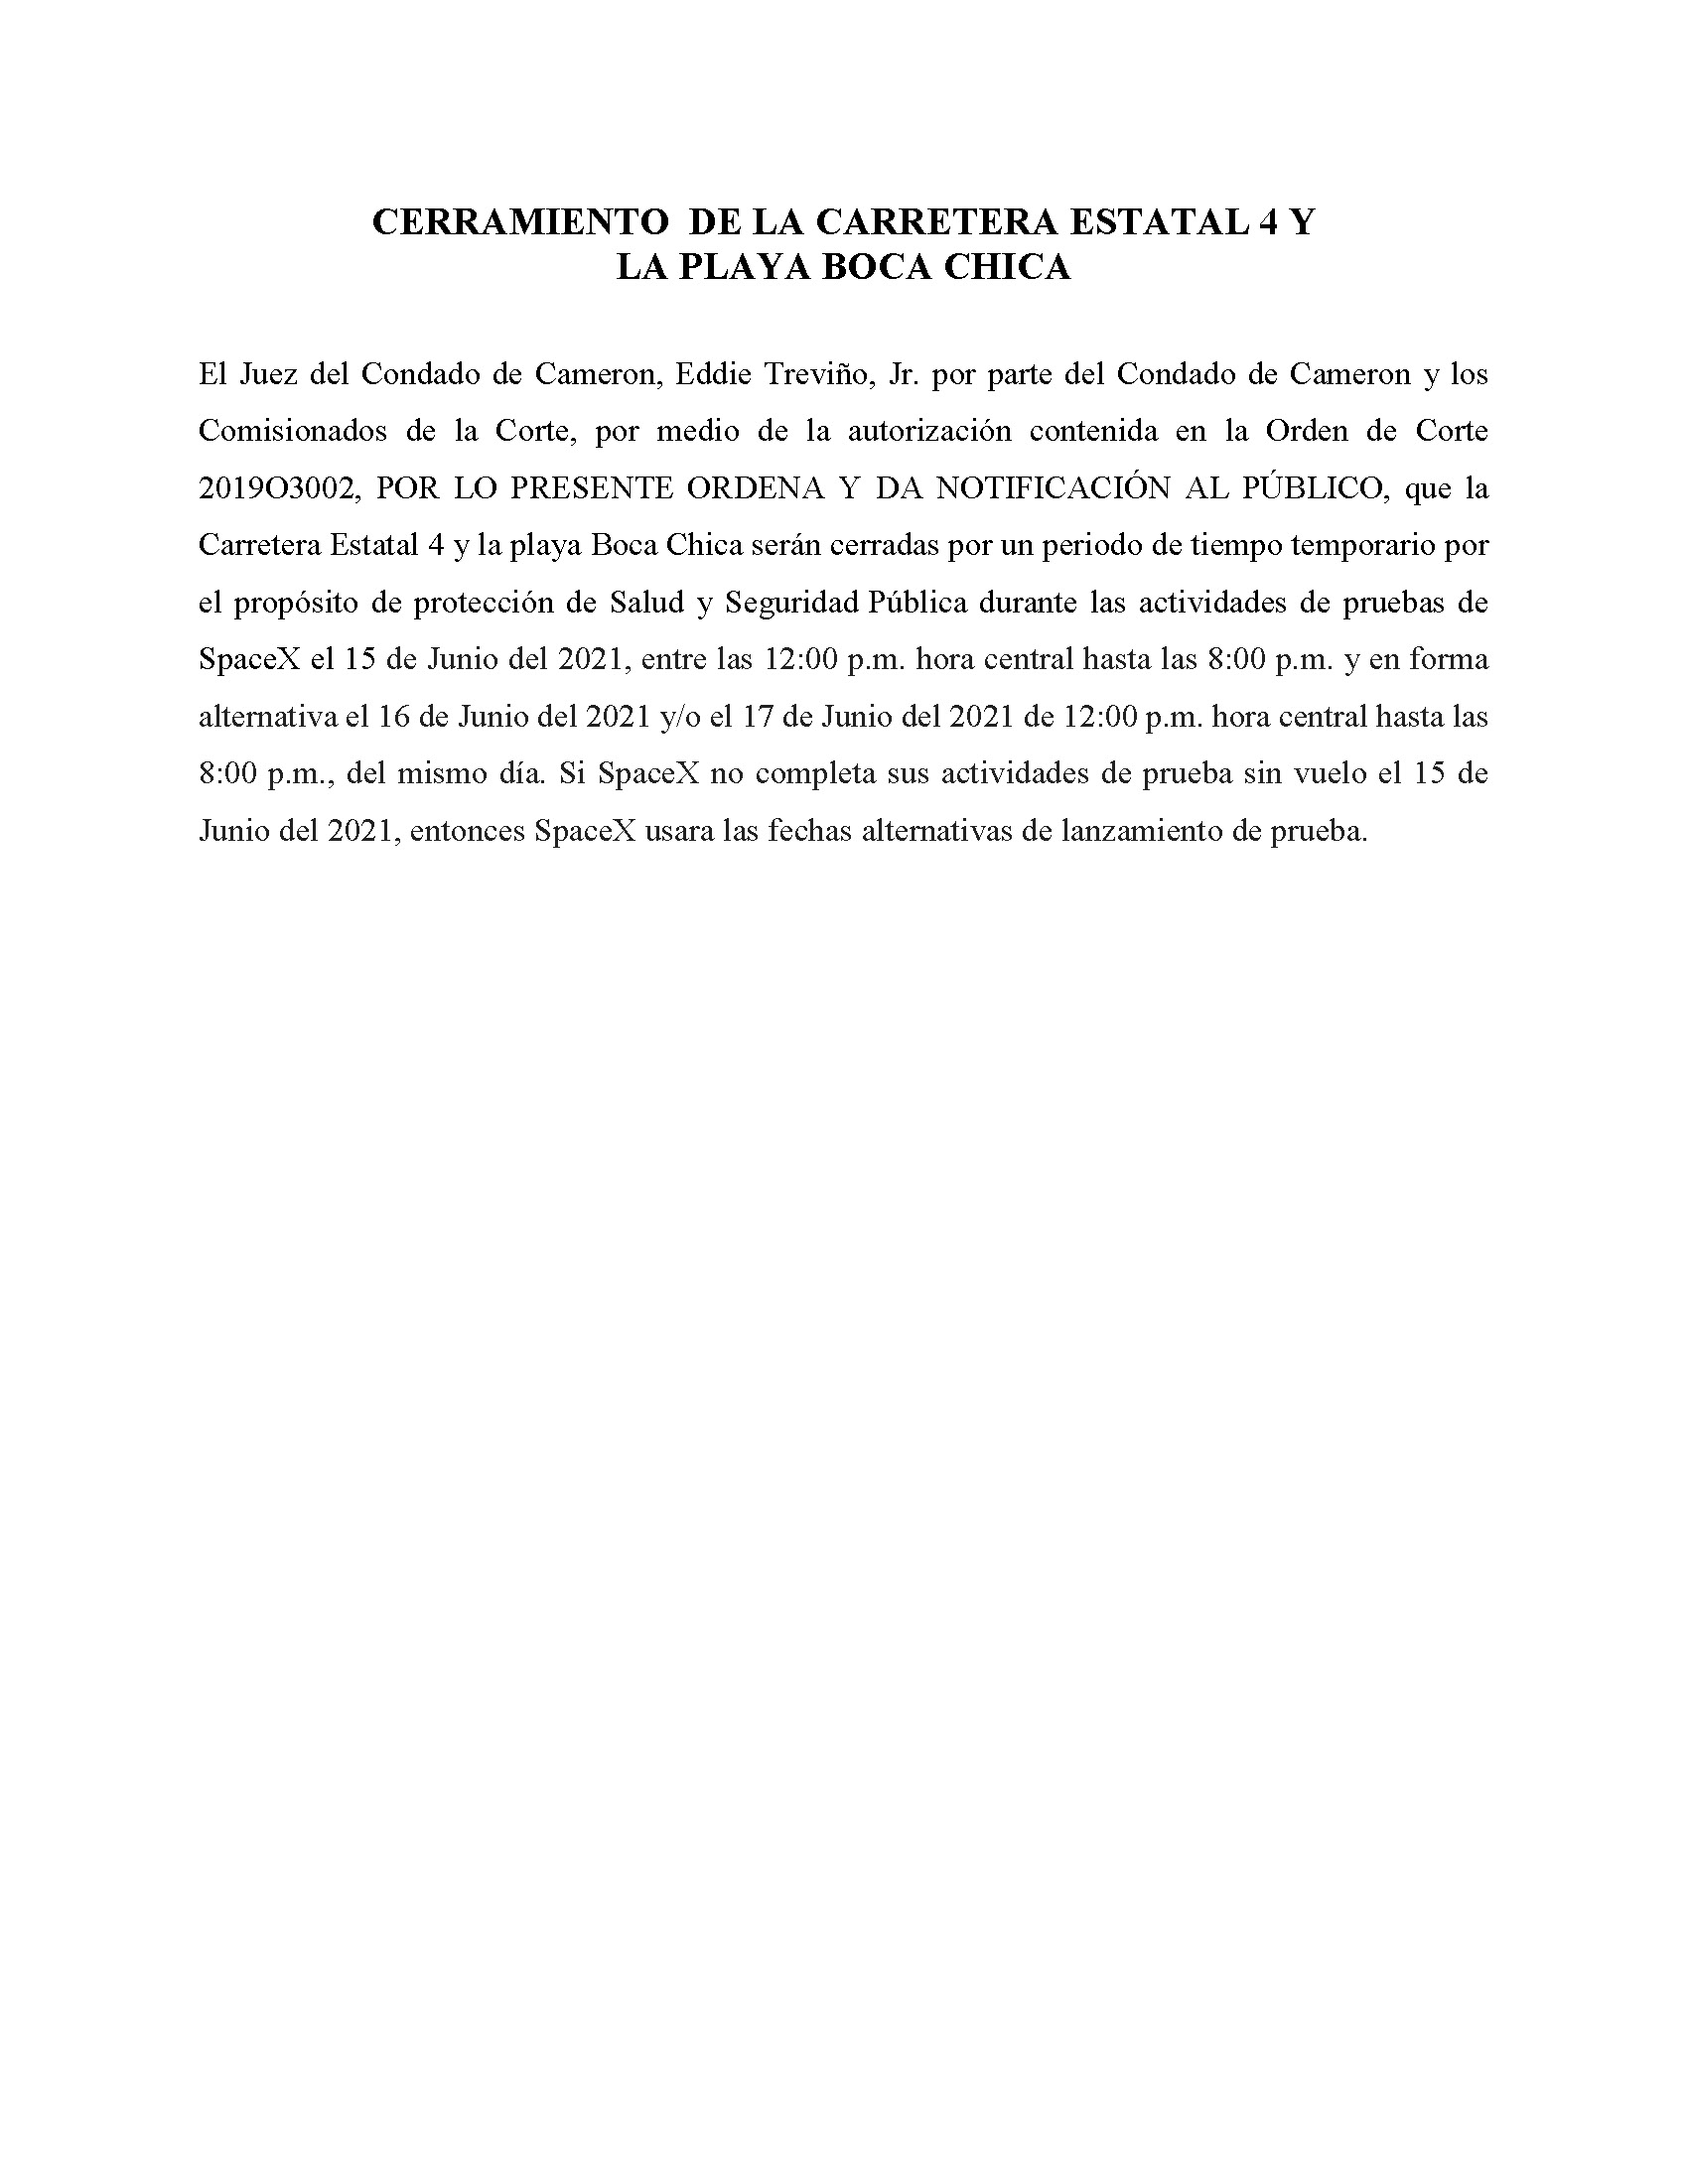 ORDER.CLOSURE OF HIGHWAY 4 Y LA PLAYA BOCA CHICA.SPANISH.06.15.2021